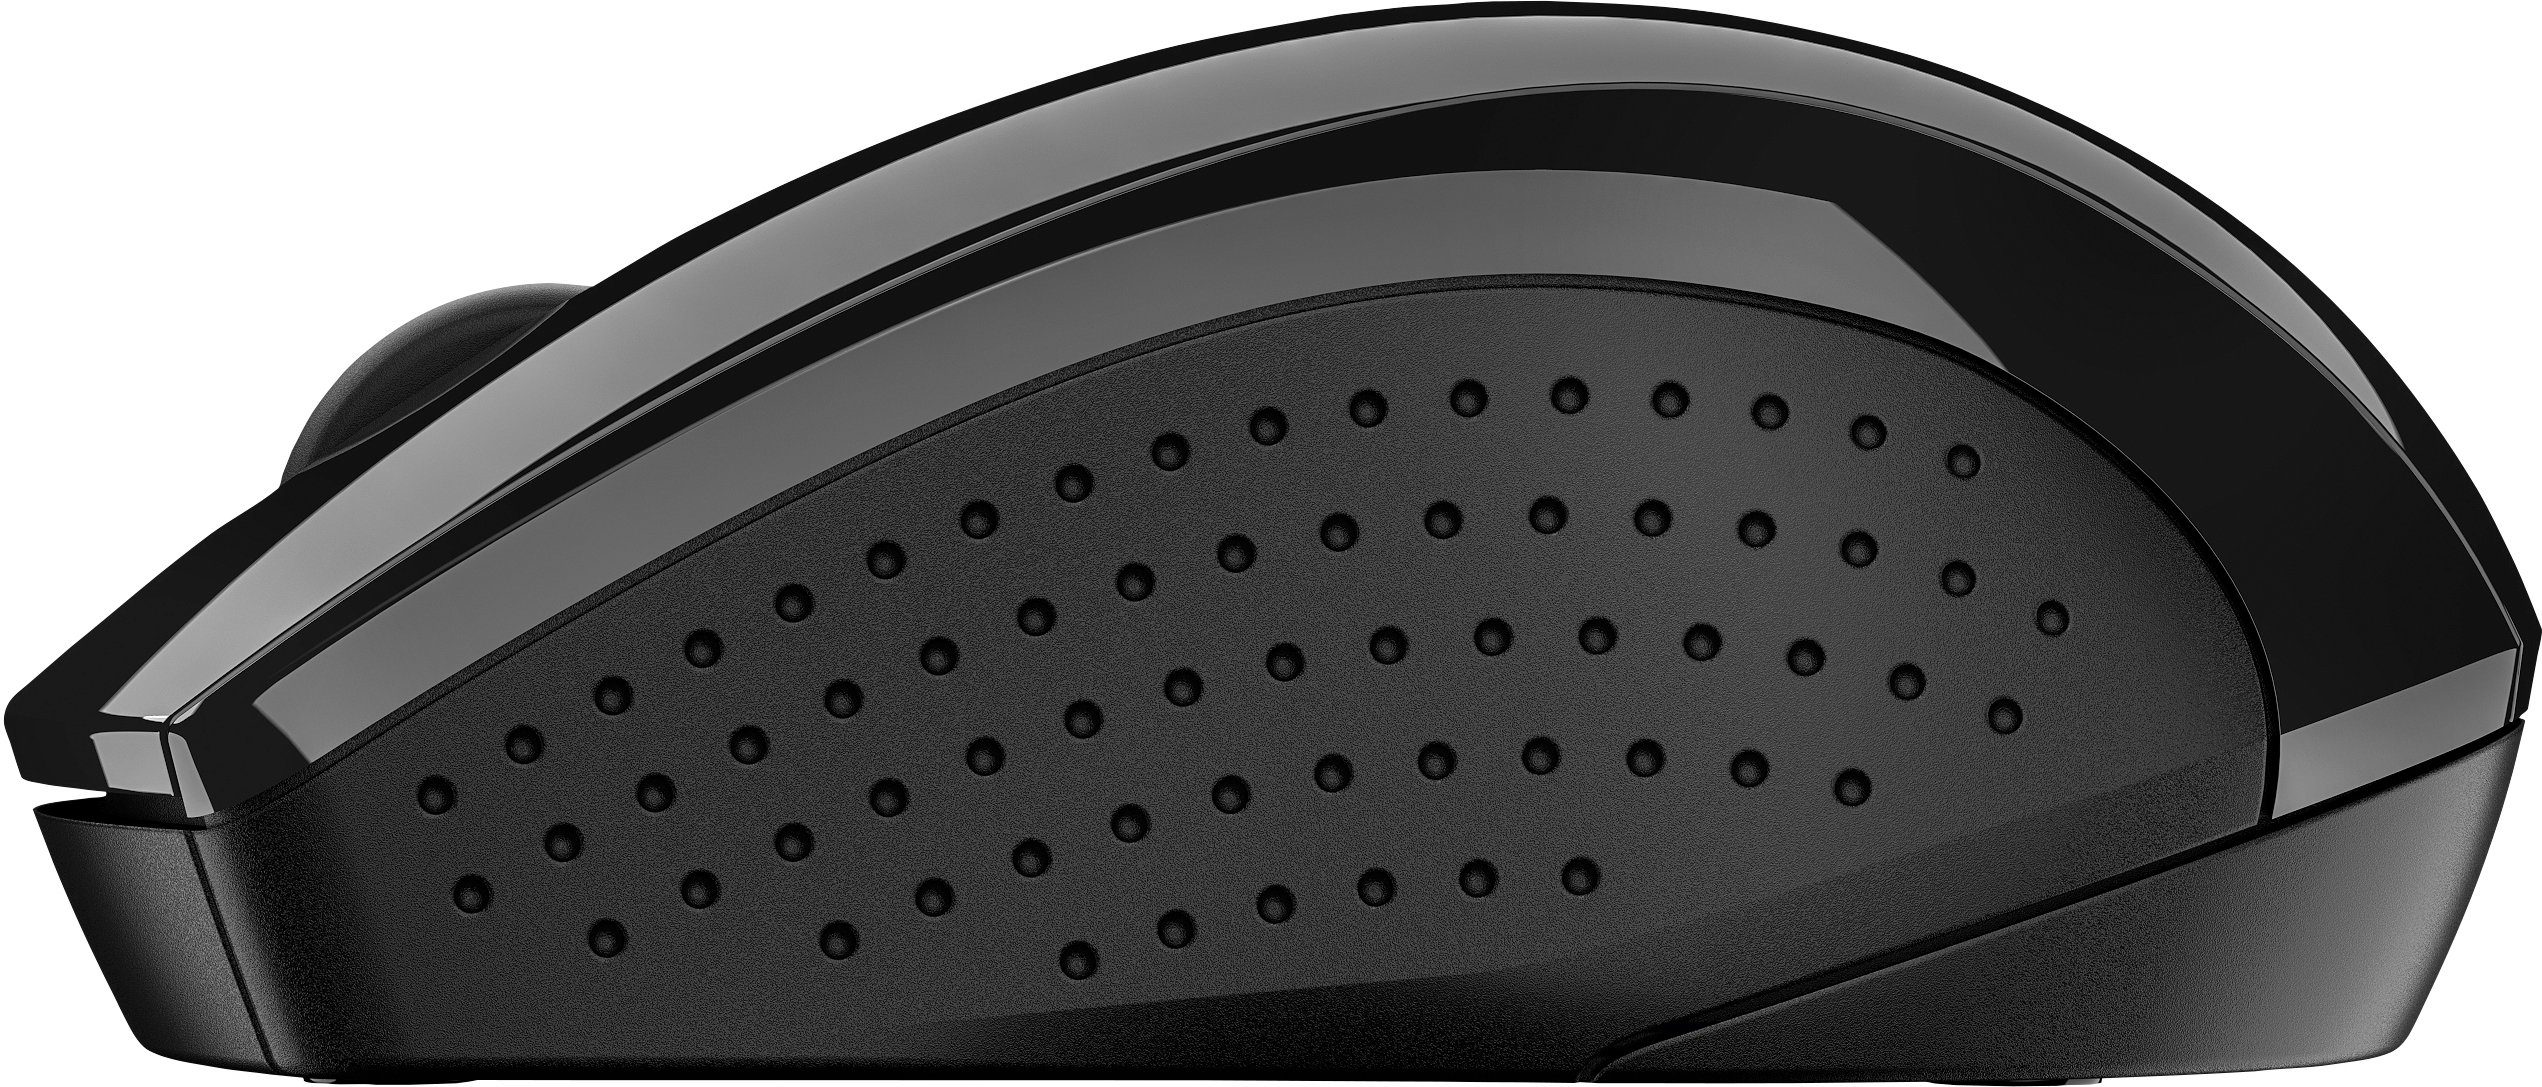 Mouse 220 (RF Wireless) Wireless Silent Maus HP